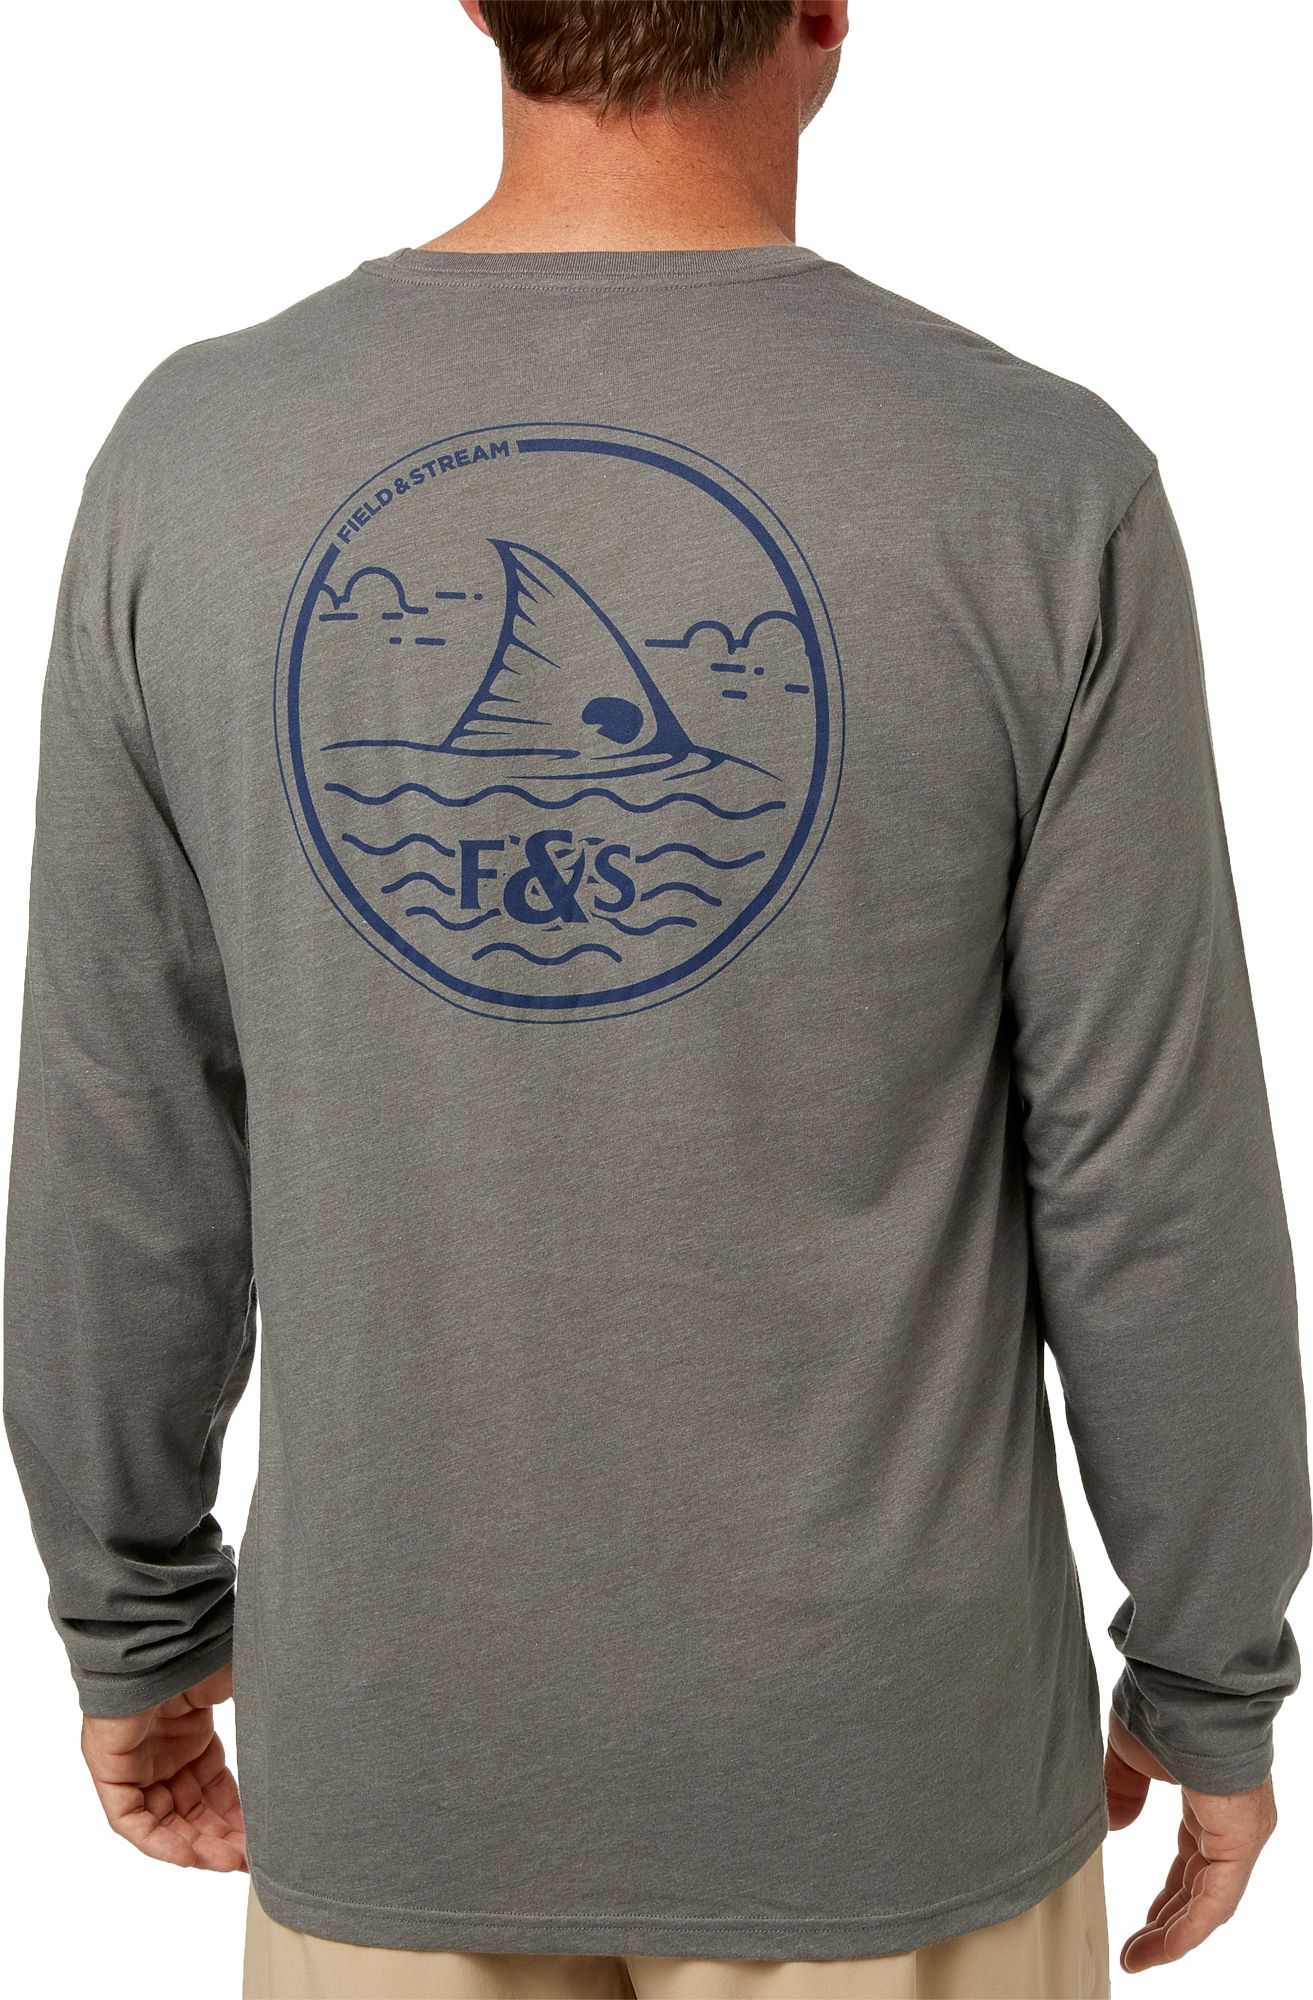 Field & Stream Fishing Shirts | Best Price Guarantee at DICK'S